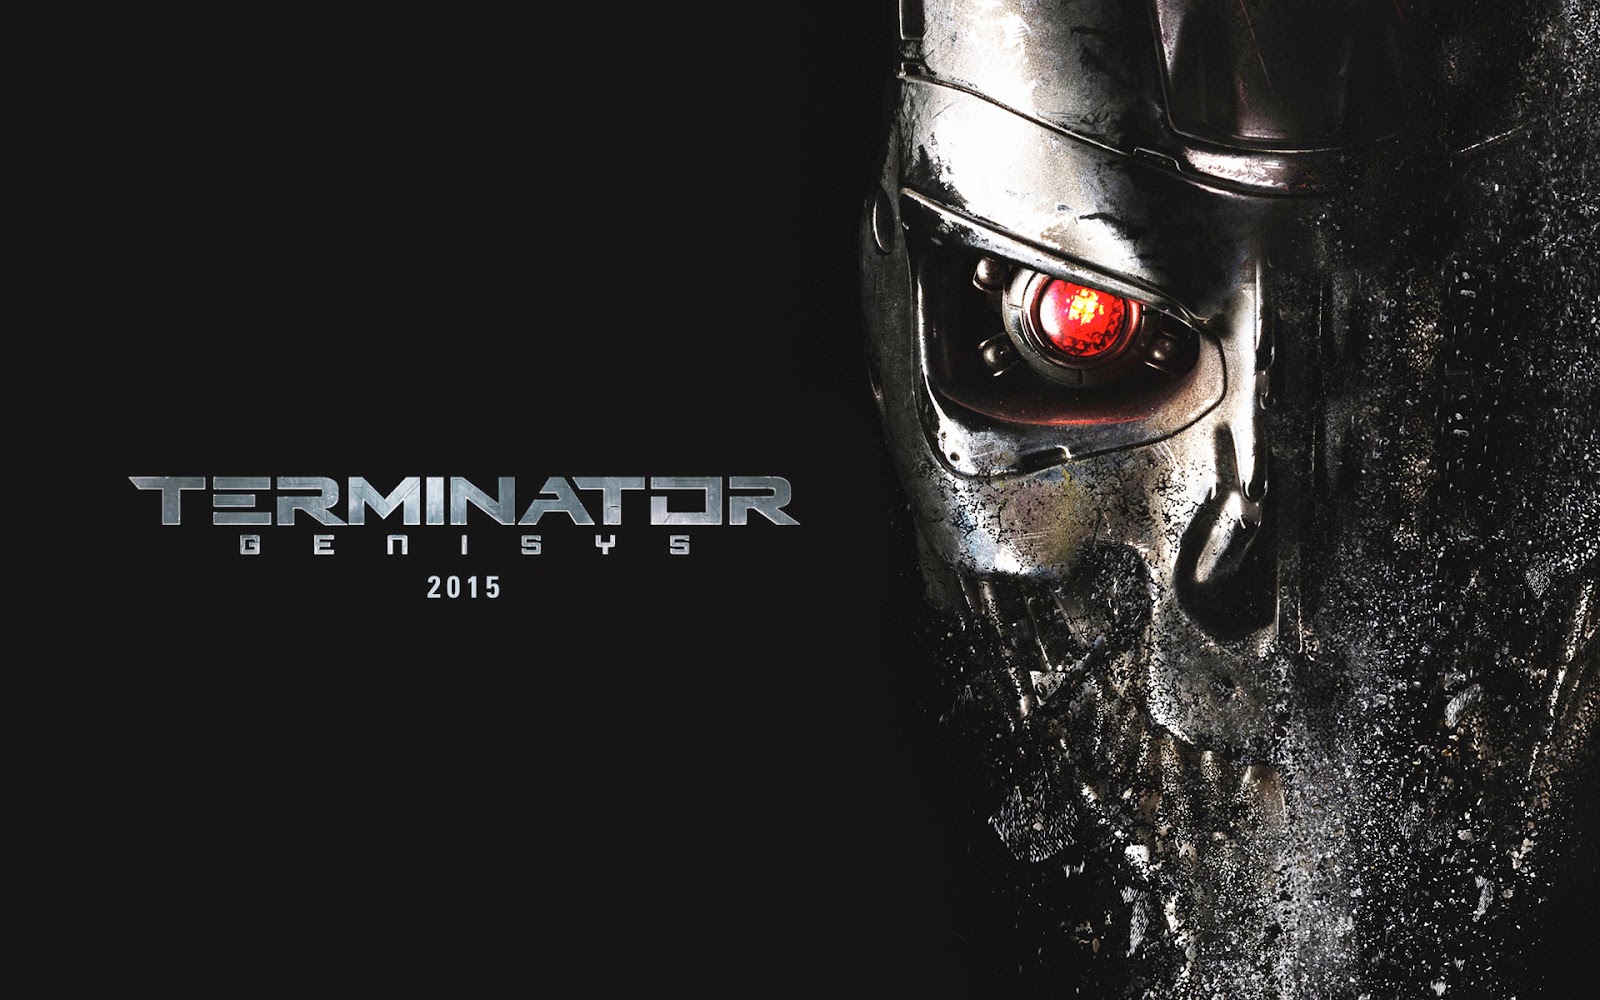 Terminator G Nesis No Est A La Espera Sino En Re Ajuste Cine